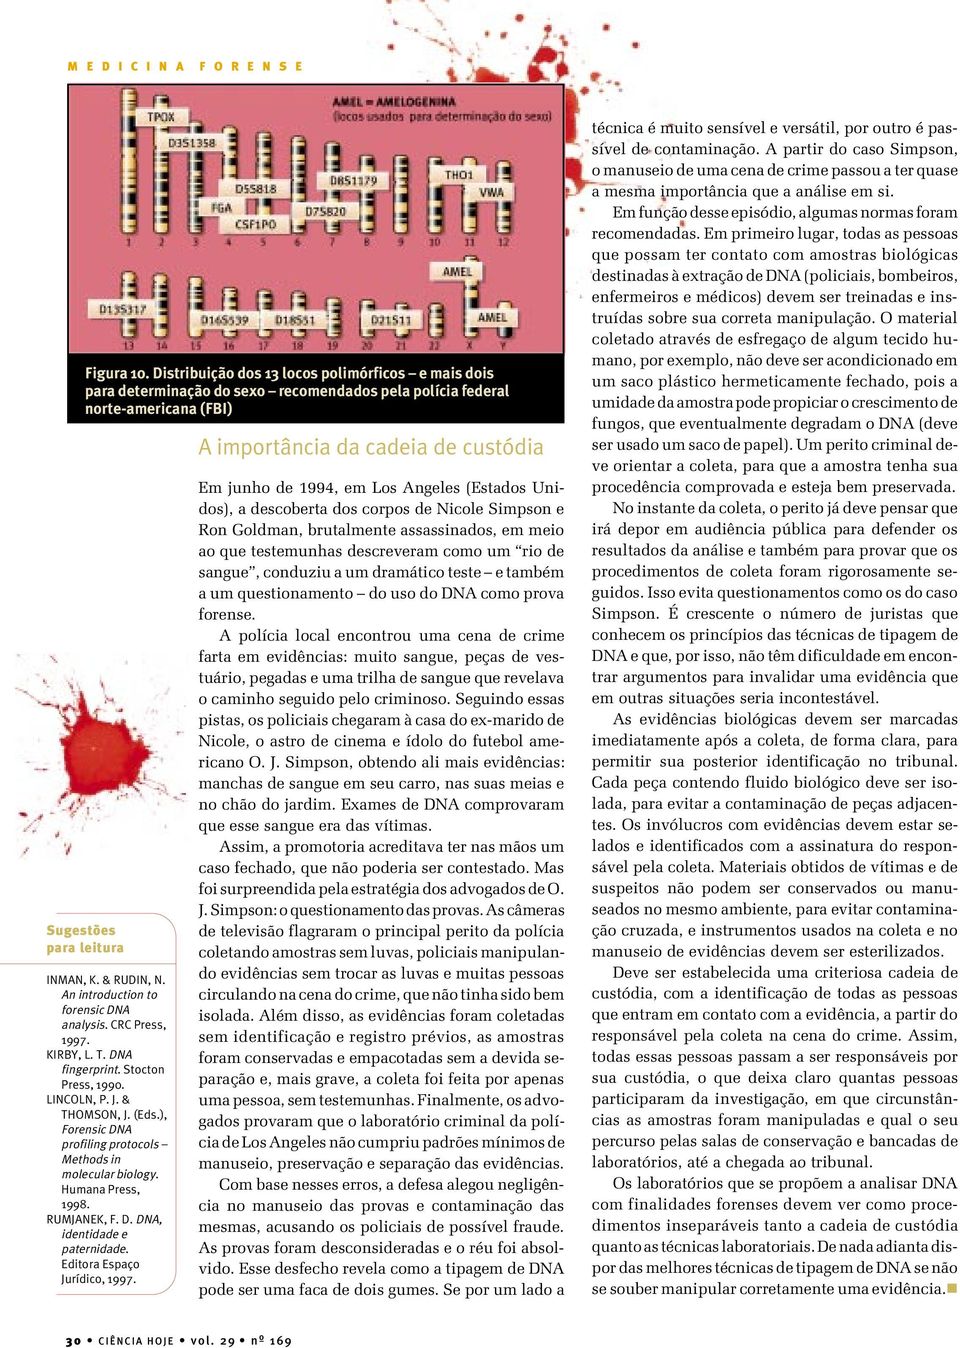 ), Forensic DNA profiling protocols Methods in molecular biology. Humana Press, 1998. RUMJANEK, F. D. DNA, identidade e paternidade. Editora Espaço Jurídico, 1997.